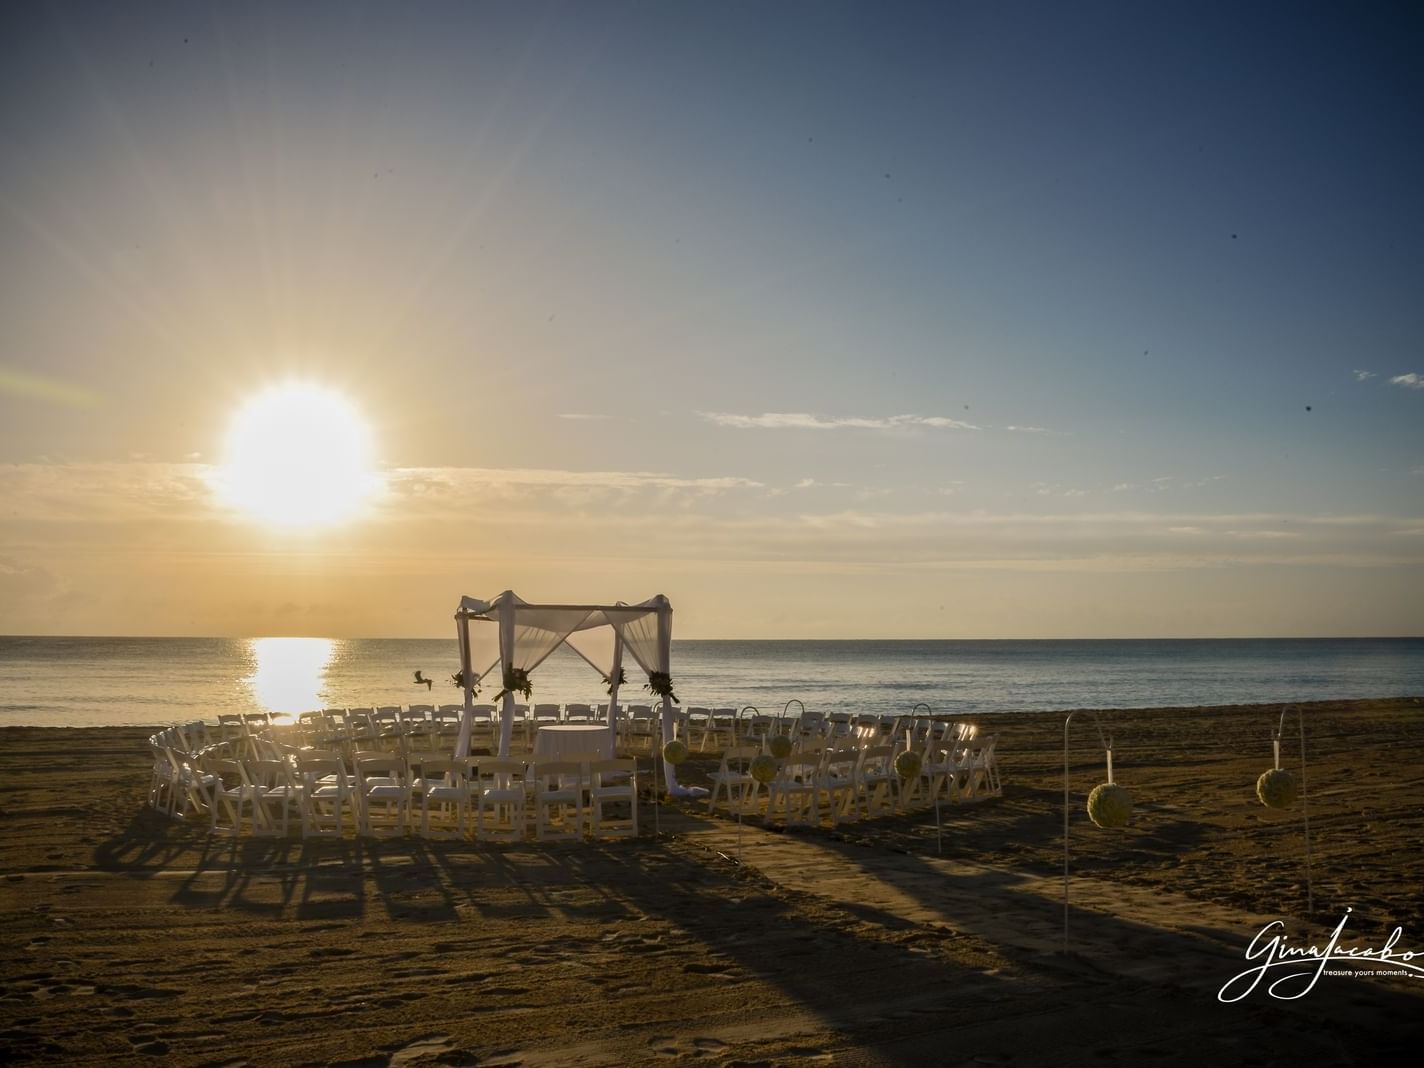 Outdoor wedding arrangements with the ocean view, La Colección